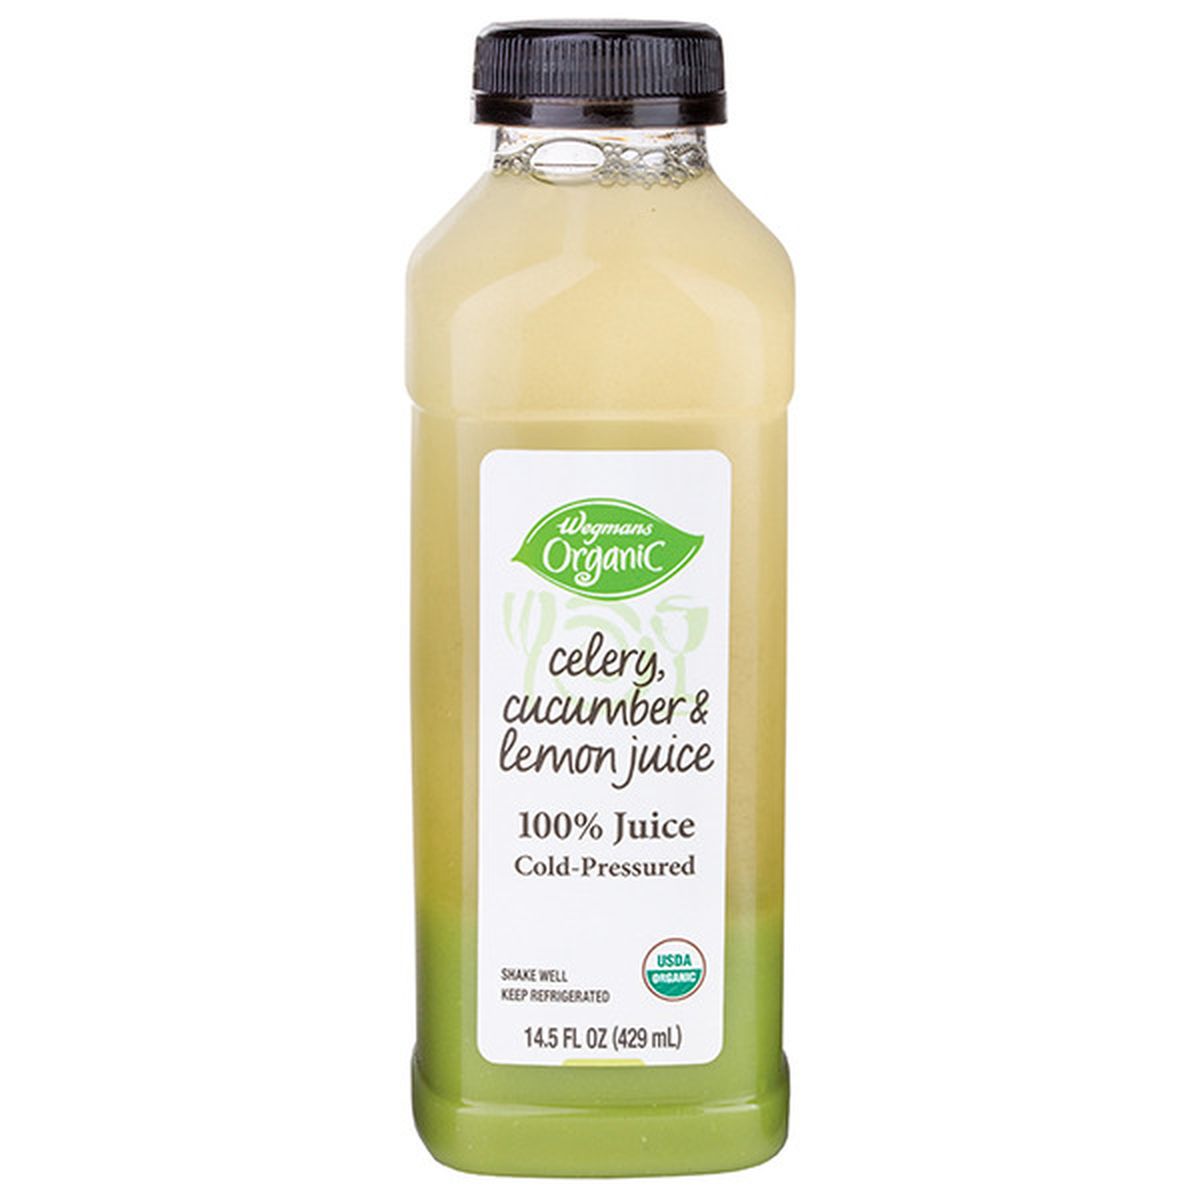 Calories in Wegmans Organic Juice, Celery Cucumber Lemon